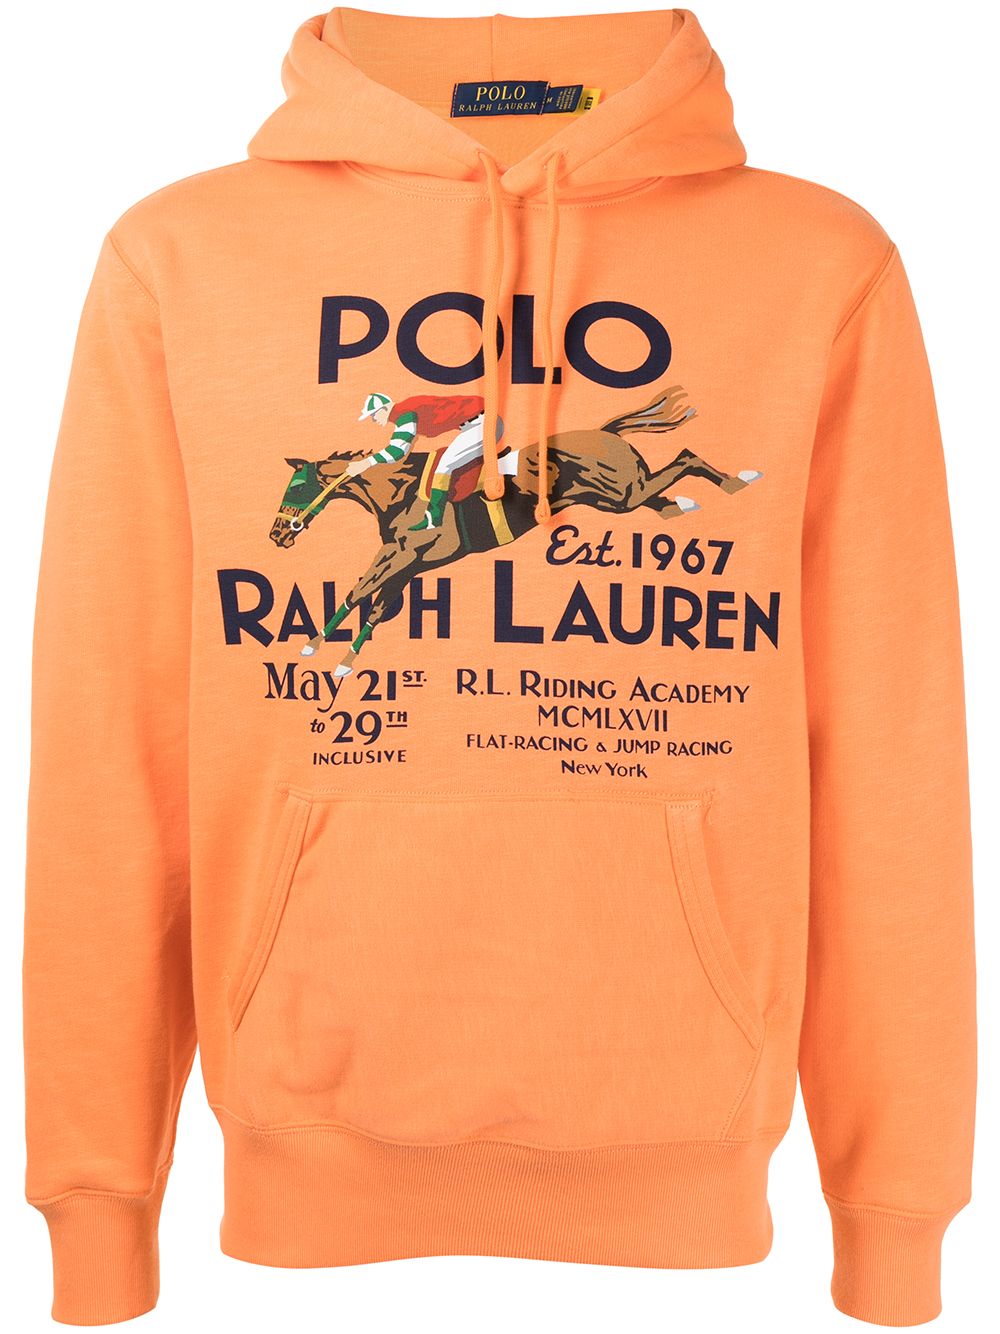 фото Polo ralph lauren худи с логотипом